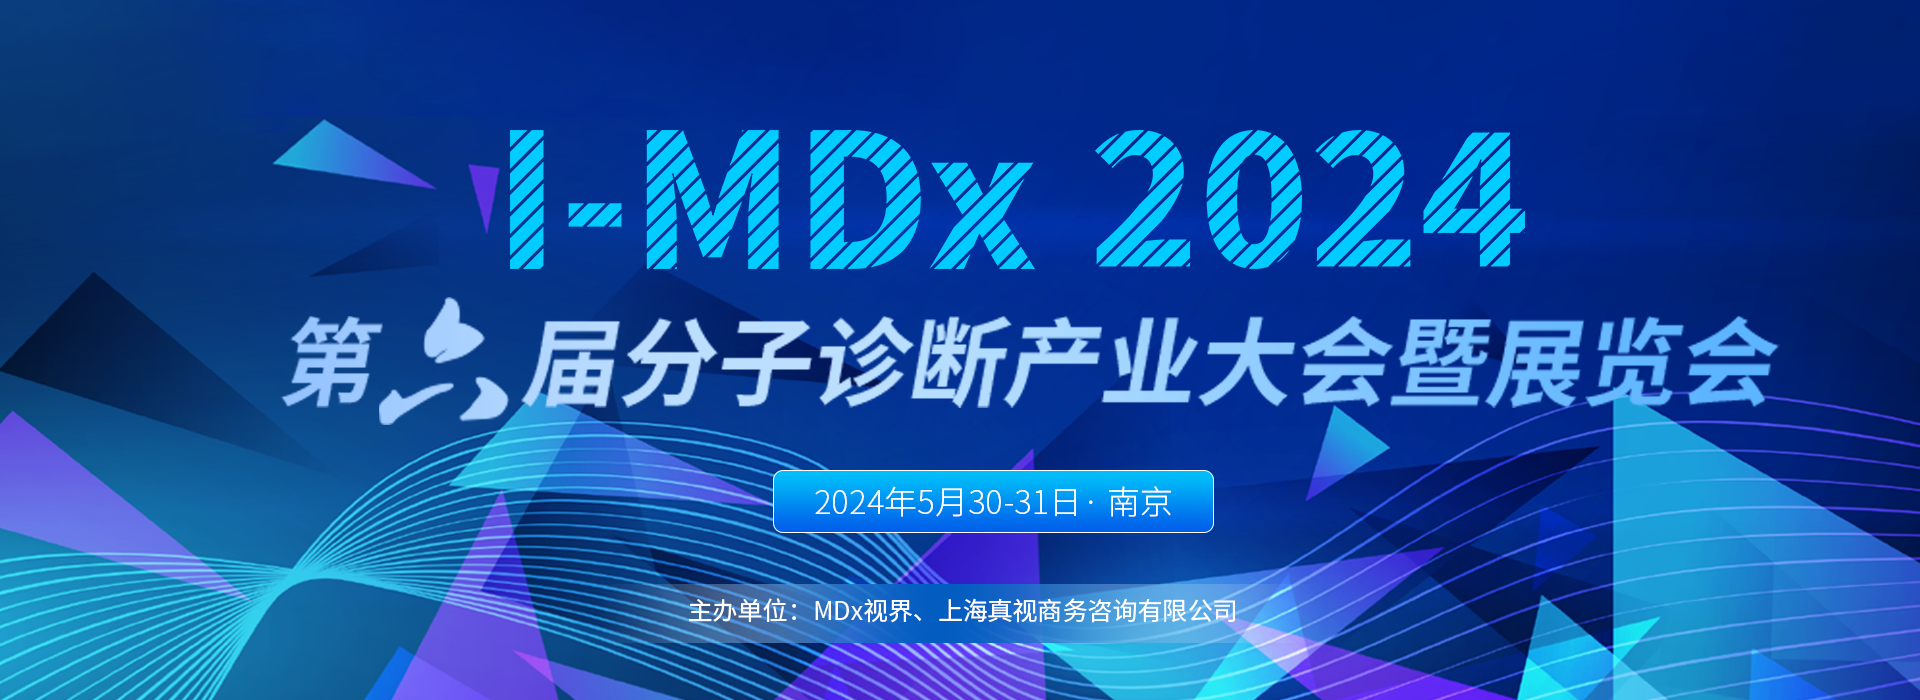 I-MDx第六届分子诊断产业大会暨展览会